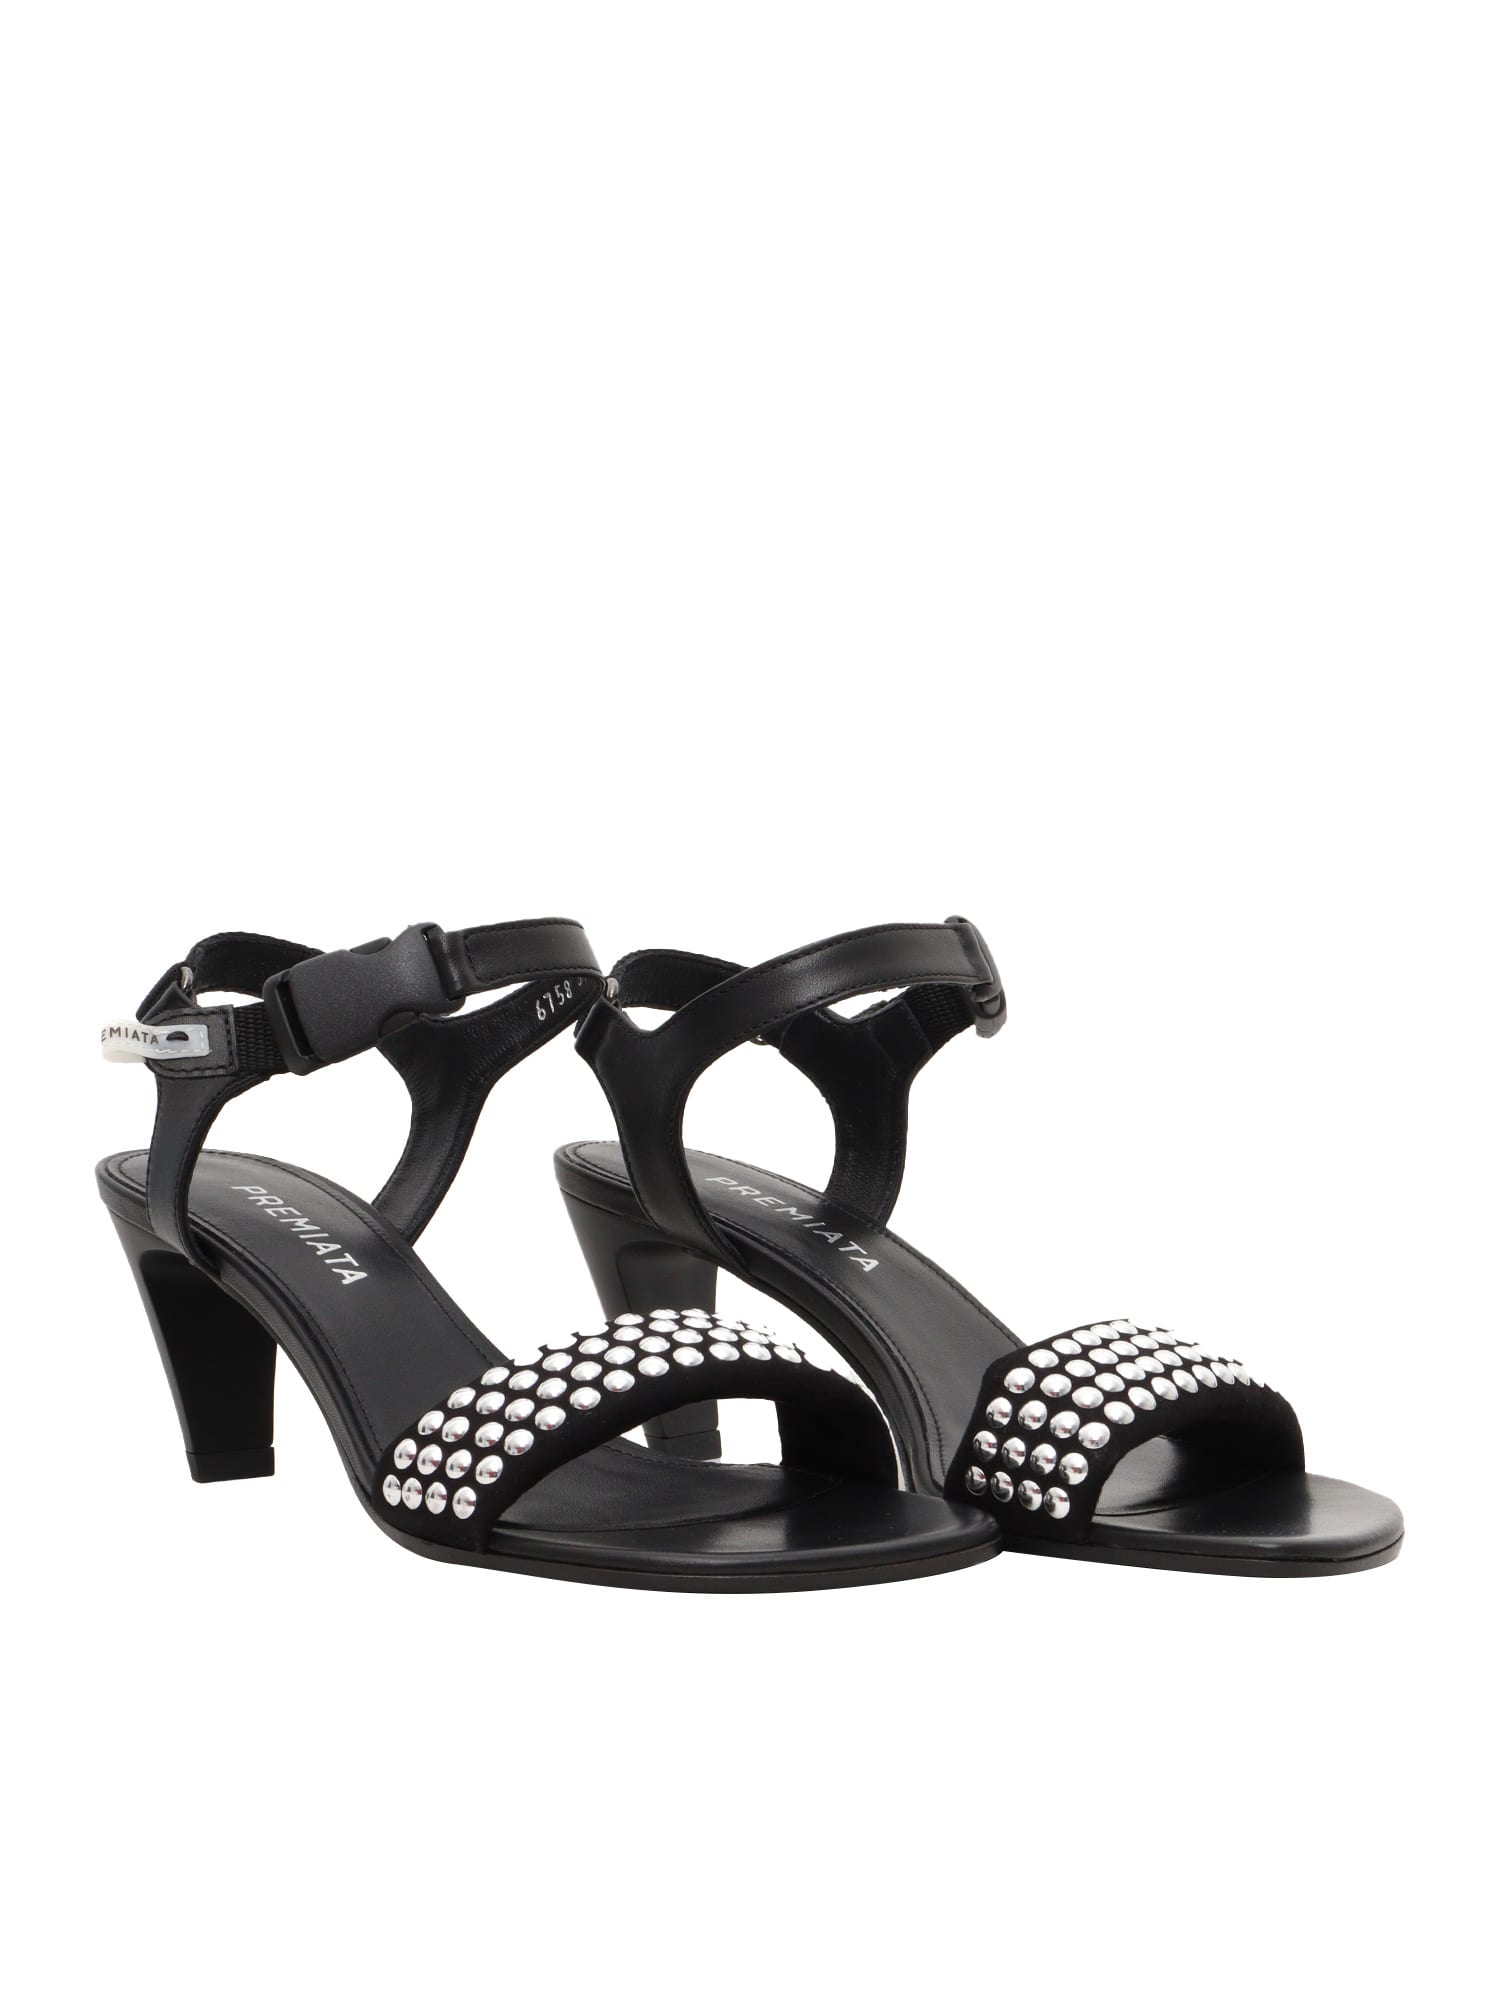 Shop Premiata Black Heeled Sandals